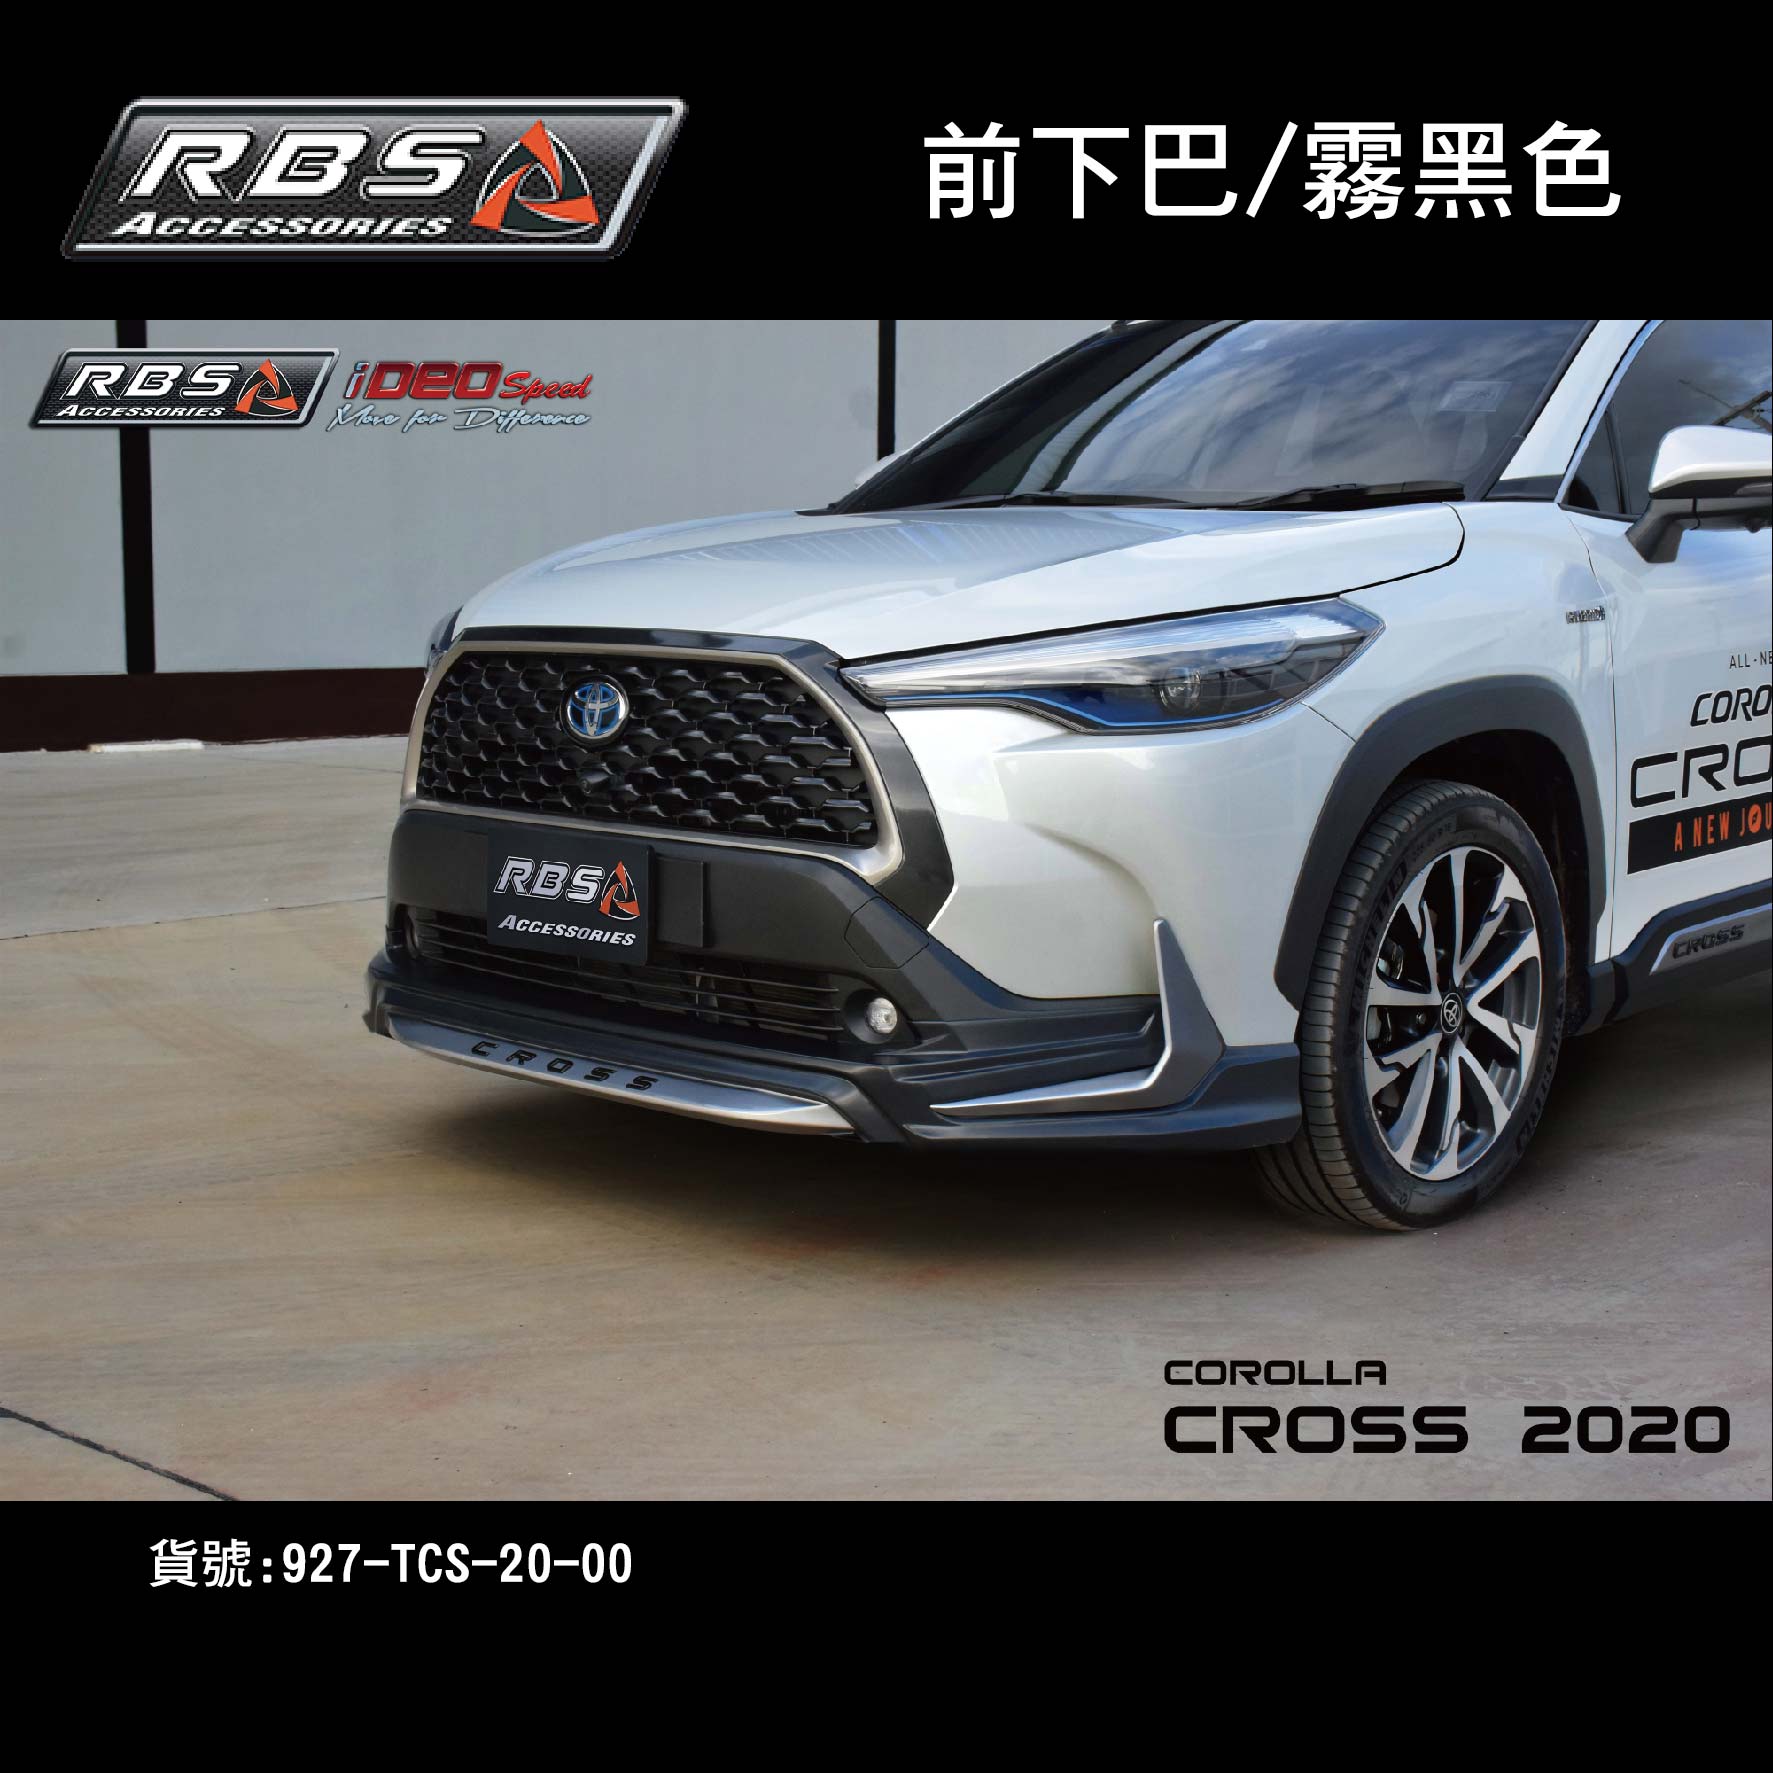 【MRK】RBS 車身改裝 前下巴 前保桿 Corolla Cross 2020 霧黑色 RSB 泰包